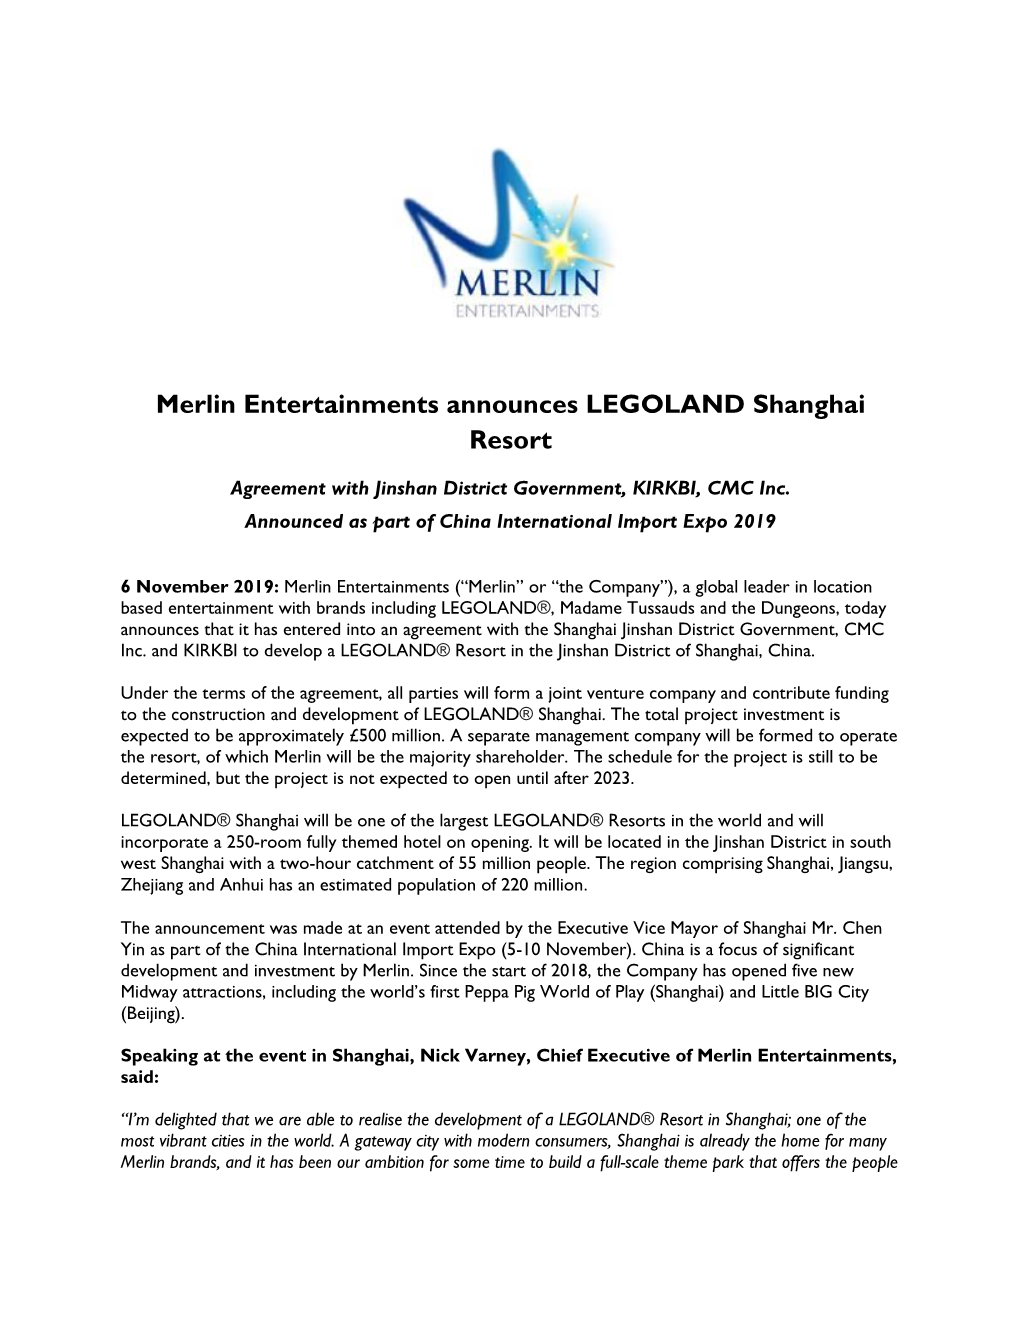 Merlin Entertainments Announces LEGOLAND Shanghai Resort